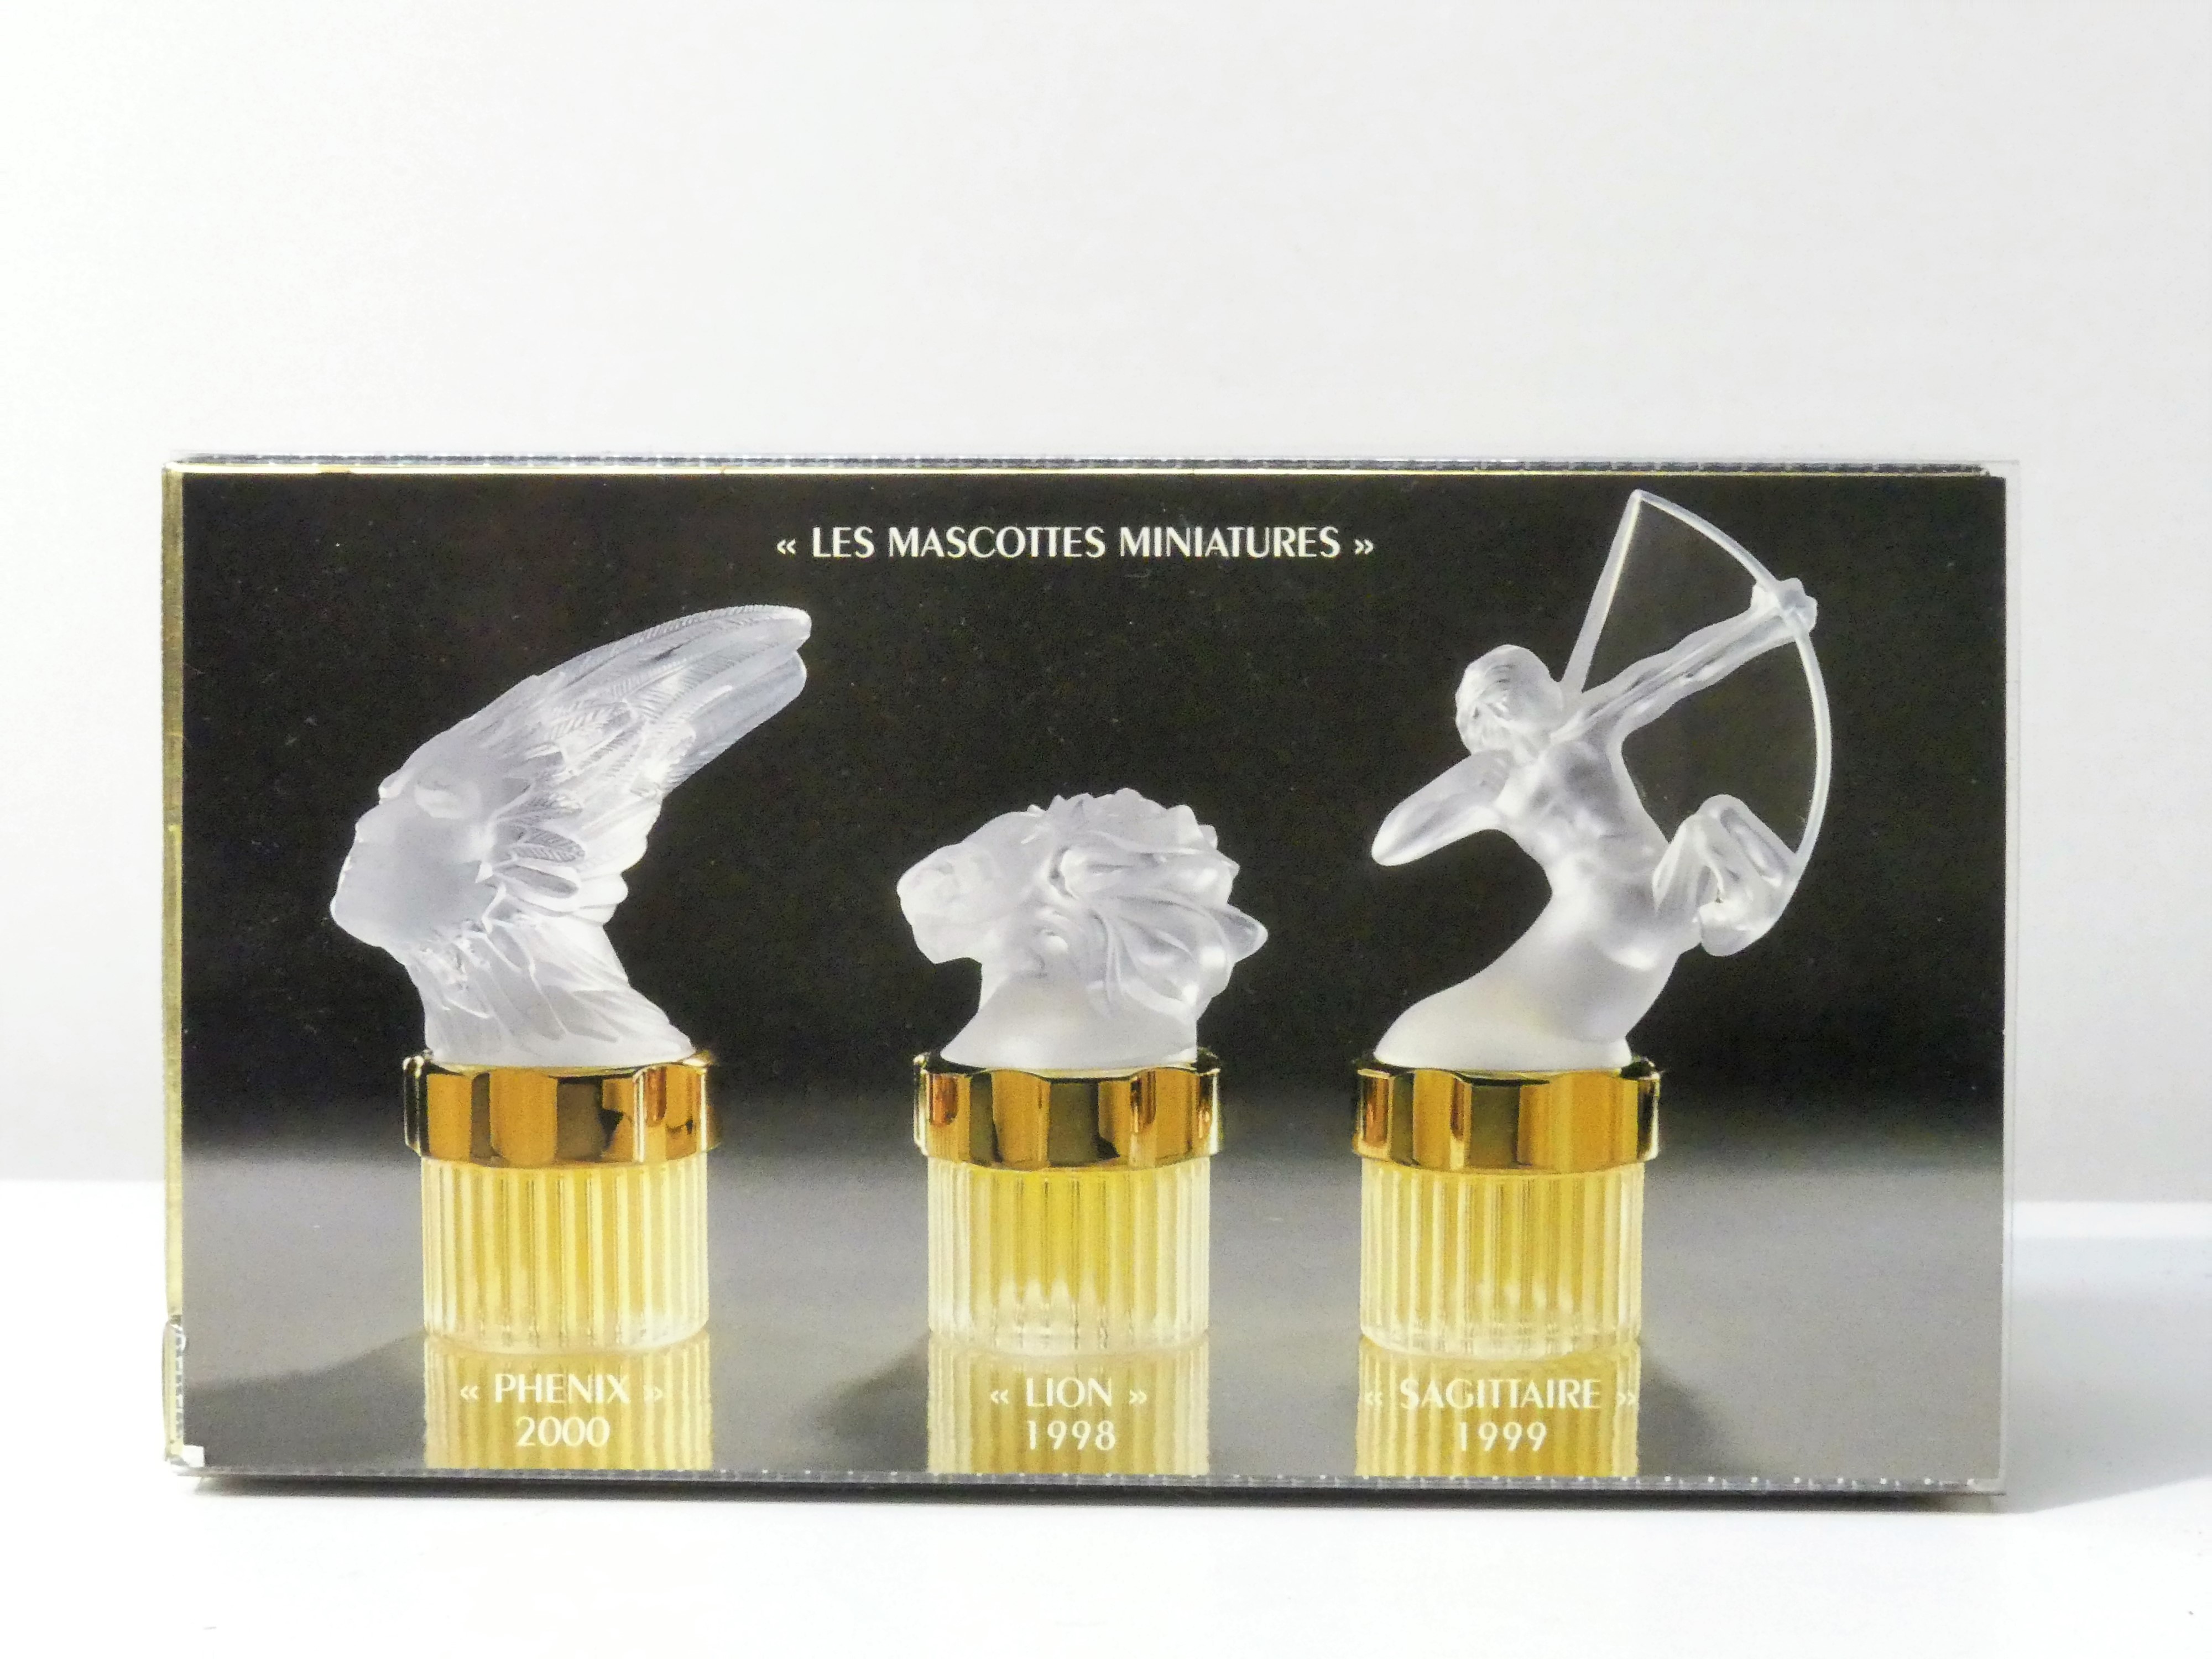 Lalique "Les Mascottes miniatures" 